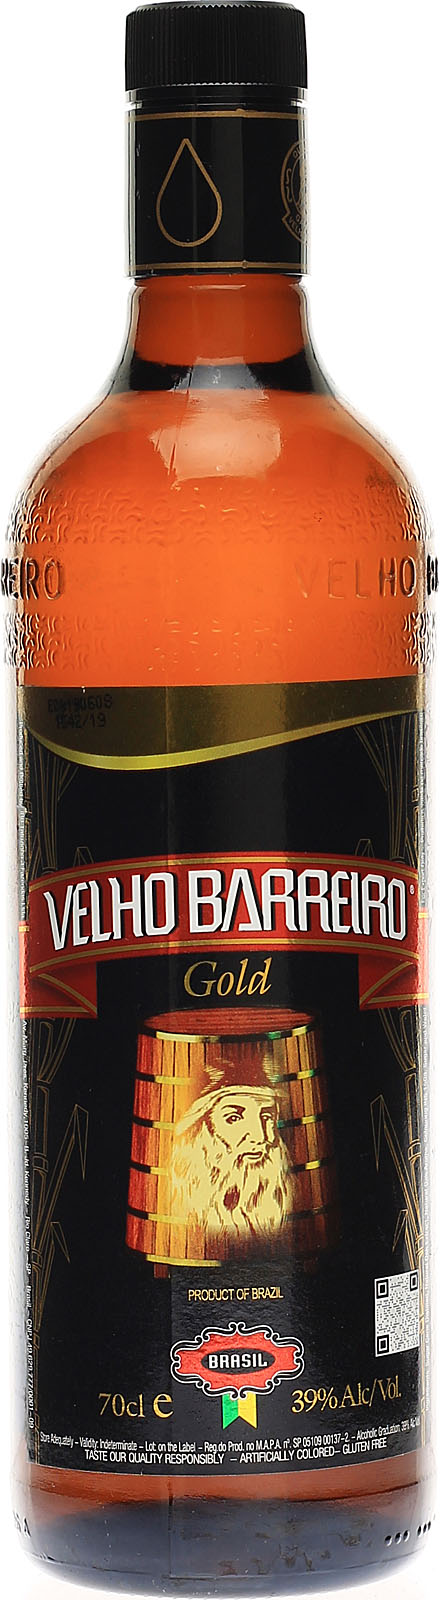 0,7 Barreiro Gold 39% (3 Jahre) Cachaca Vol Velho Liter